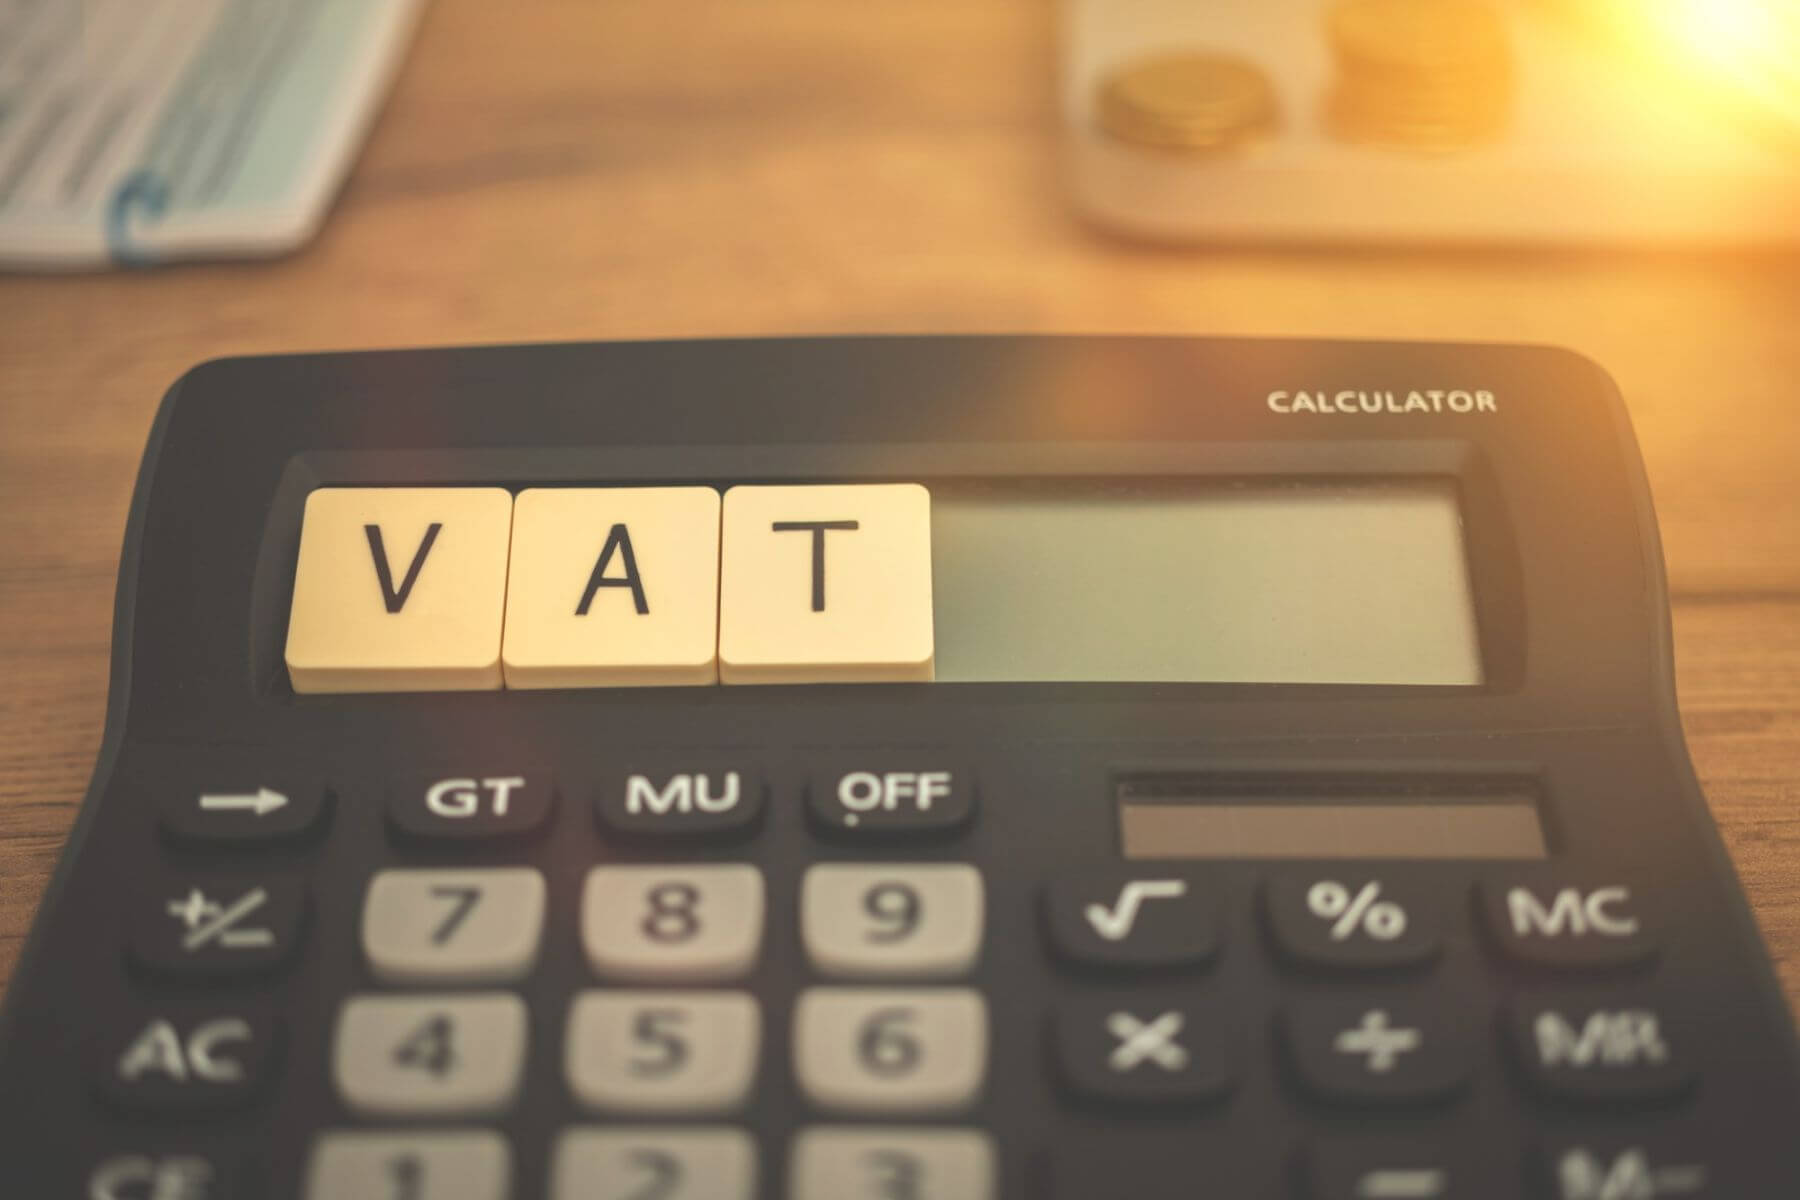 stawki vat hiszpania: kalkulator, na którym leżą scrabble z napisem VAT